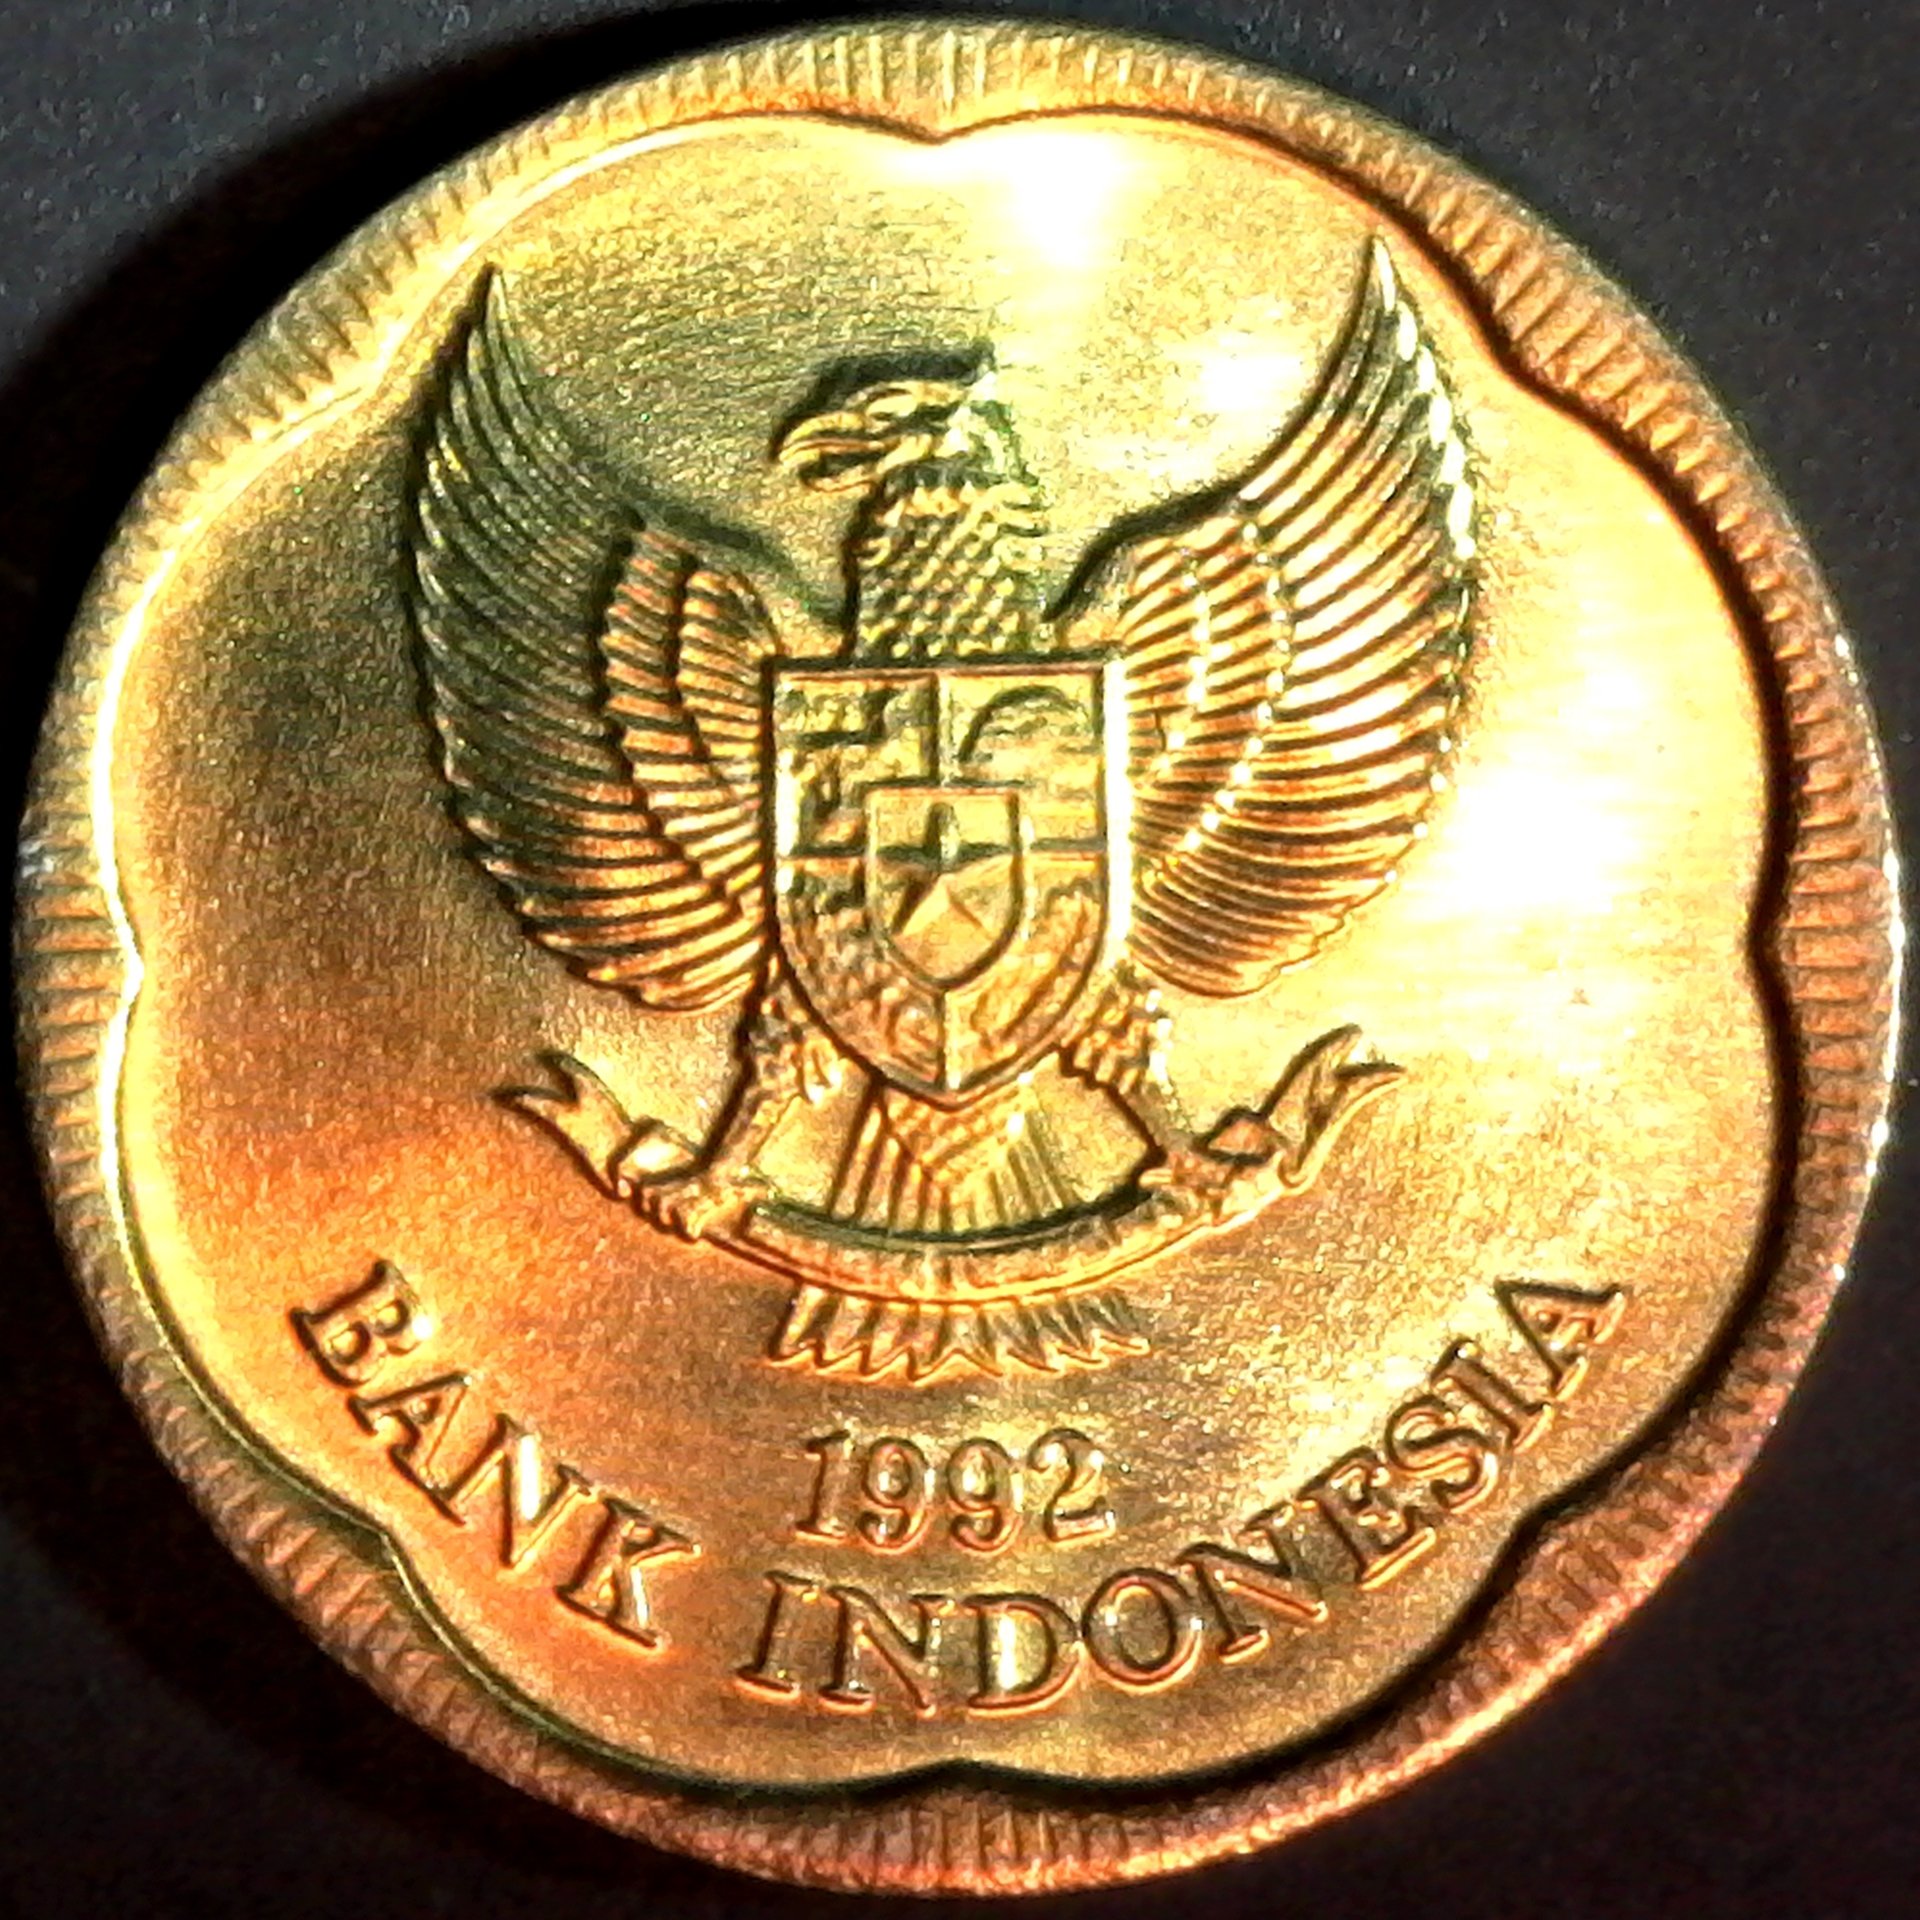 Indonesia 500 Rupiah 1992 obv.jpg